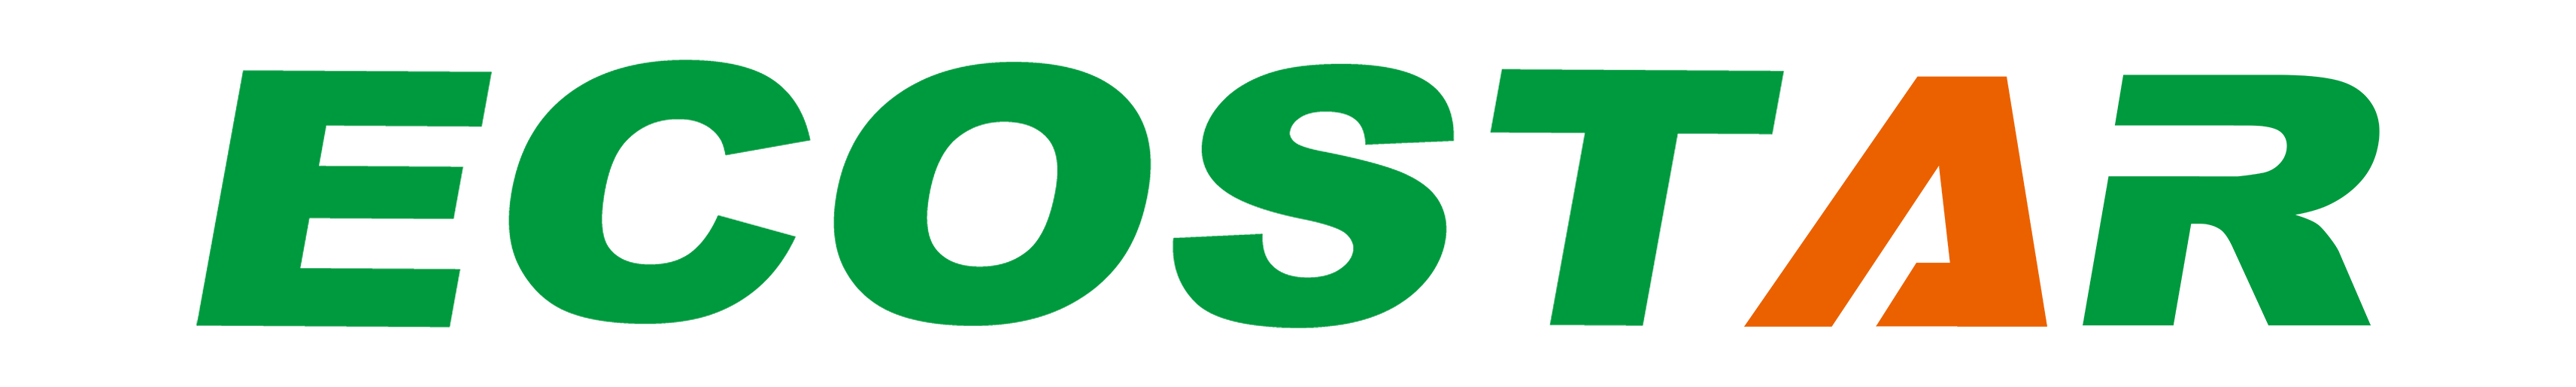 Ecostar-Headline Sponsor